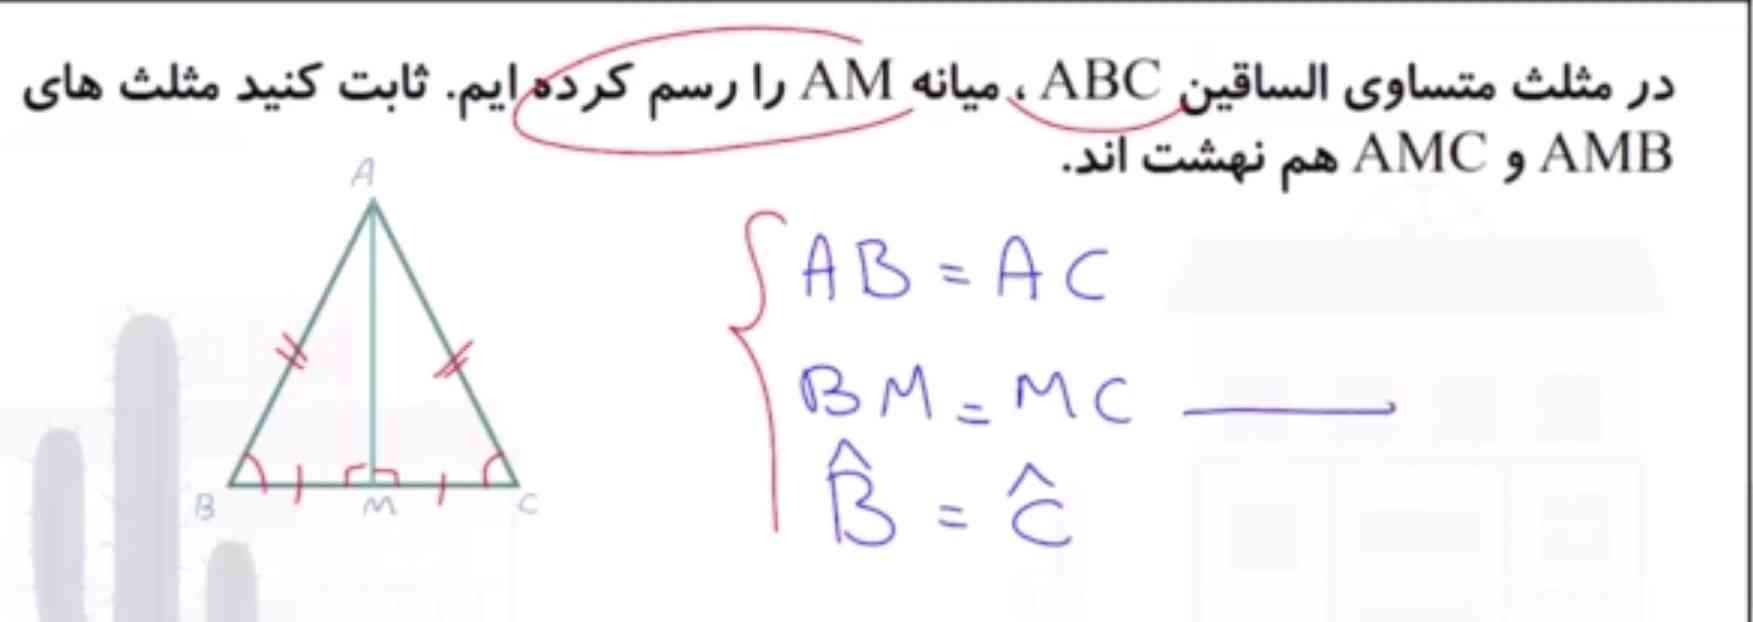 تو این مسئله بجای زاویه b=c میتونیم بنویسیم زاویه m1=m2؟
(جواب درست با توضیح معرکه میگیره)🪤